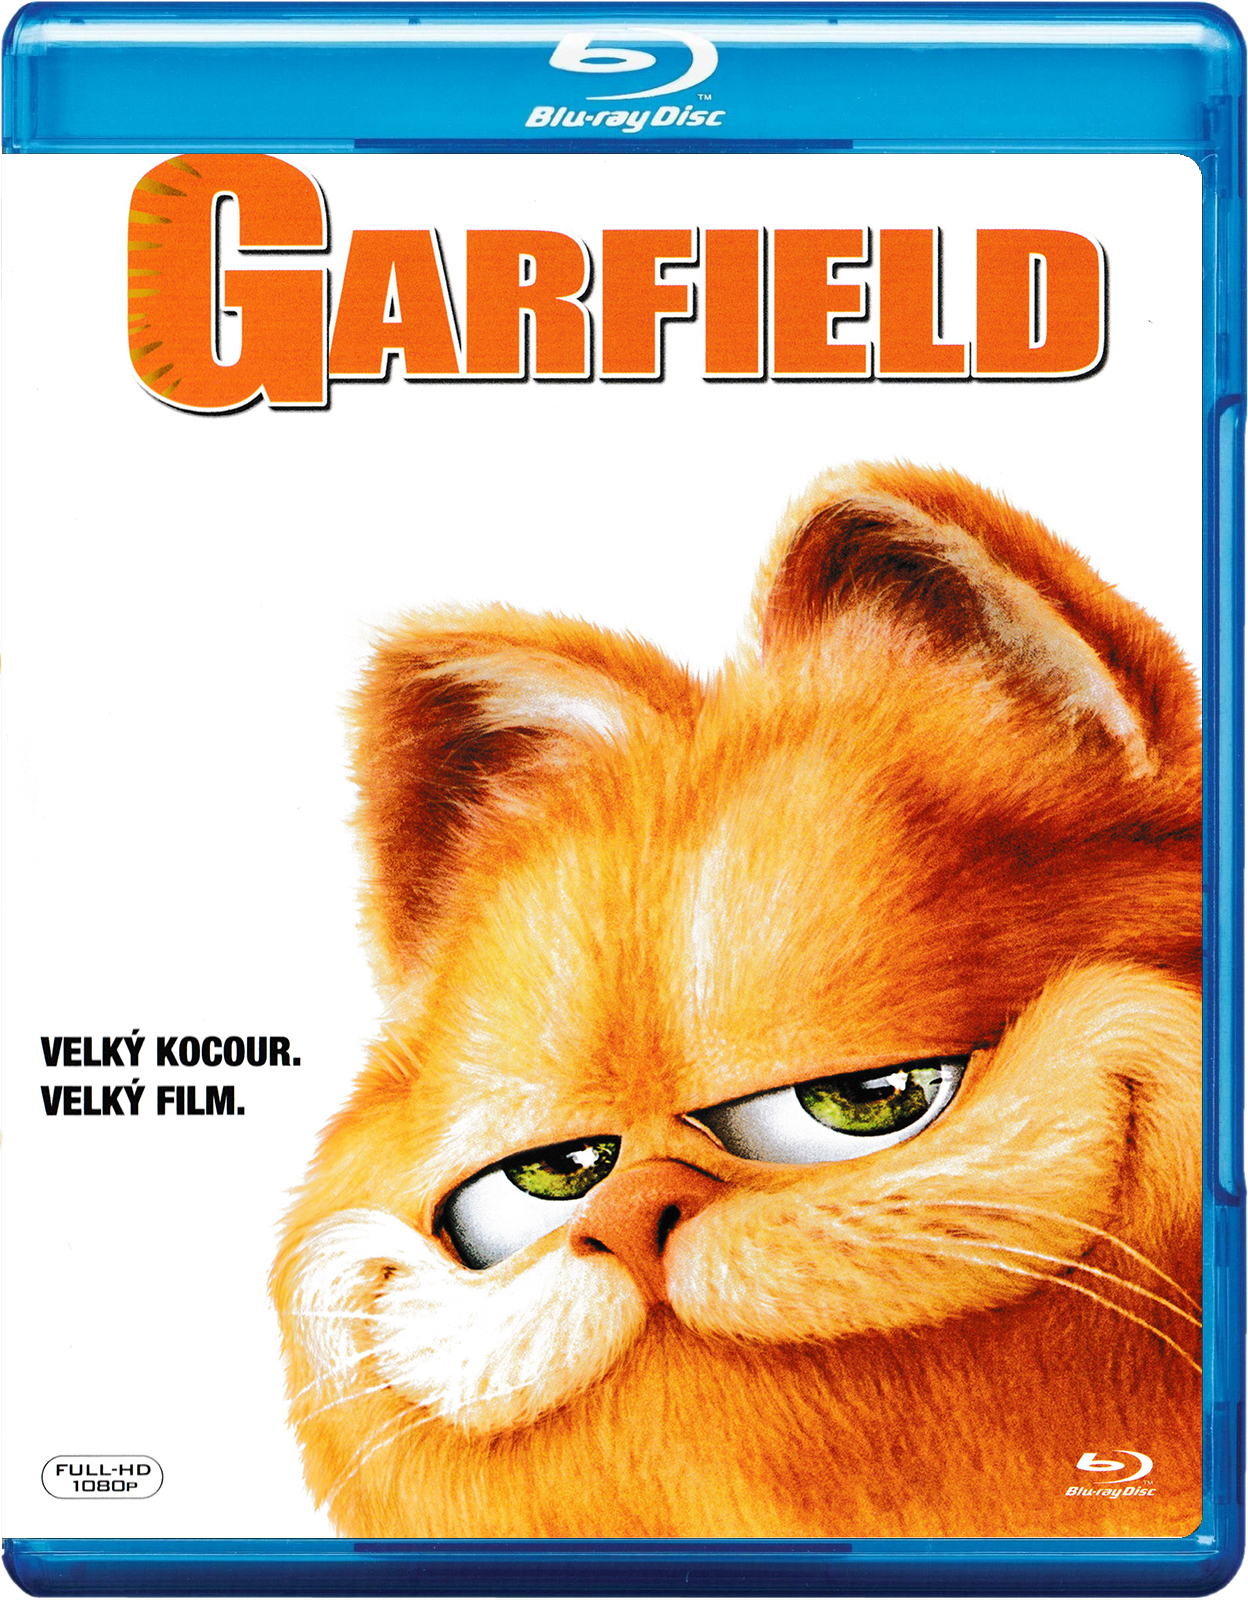 Stiahni si HD Filmy Garfield ve filmu / Garfield: The Movie (2004)(CZ/EN)[1080pHD] = CSFD 53%